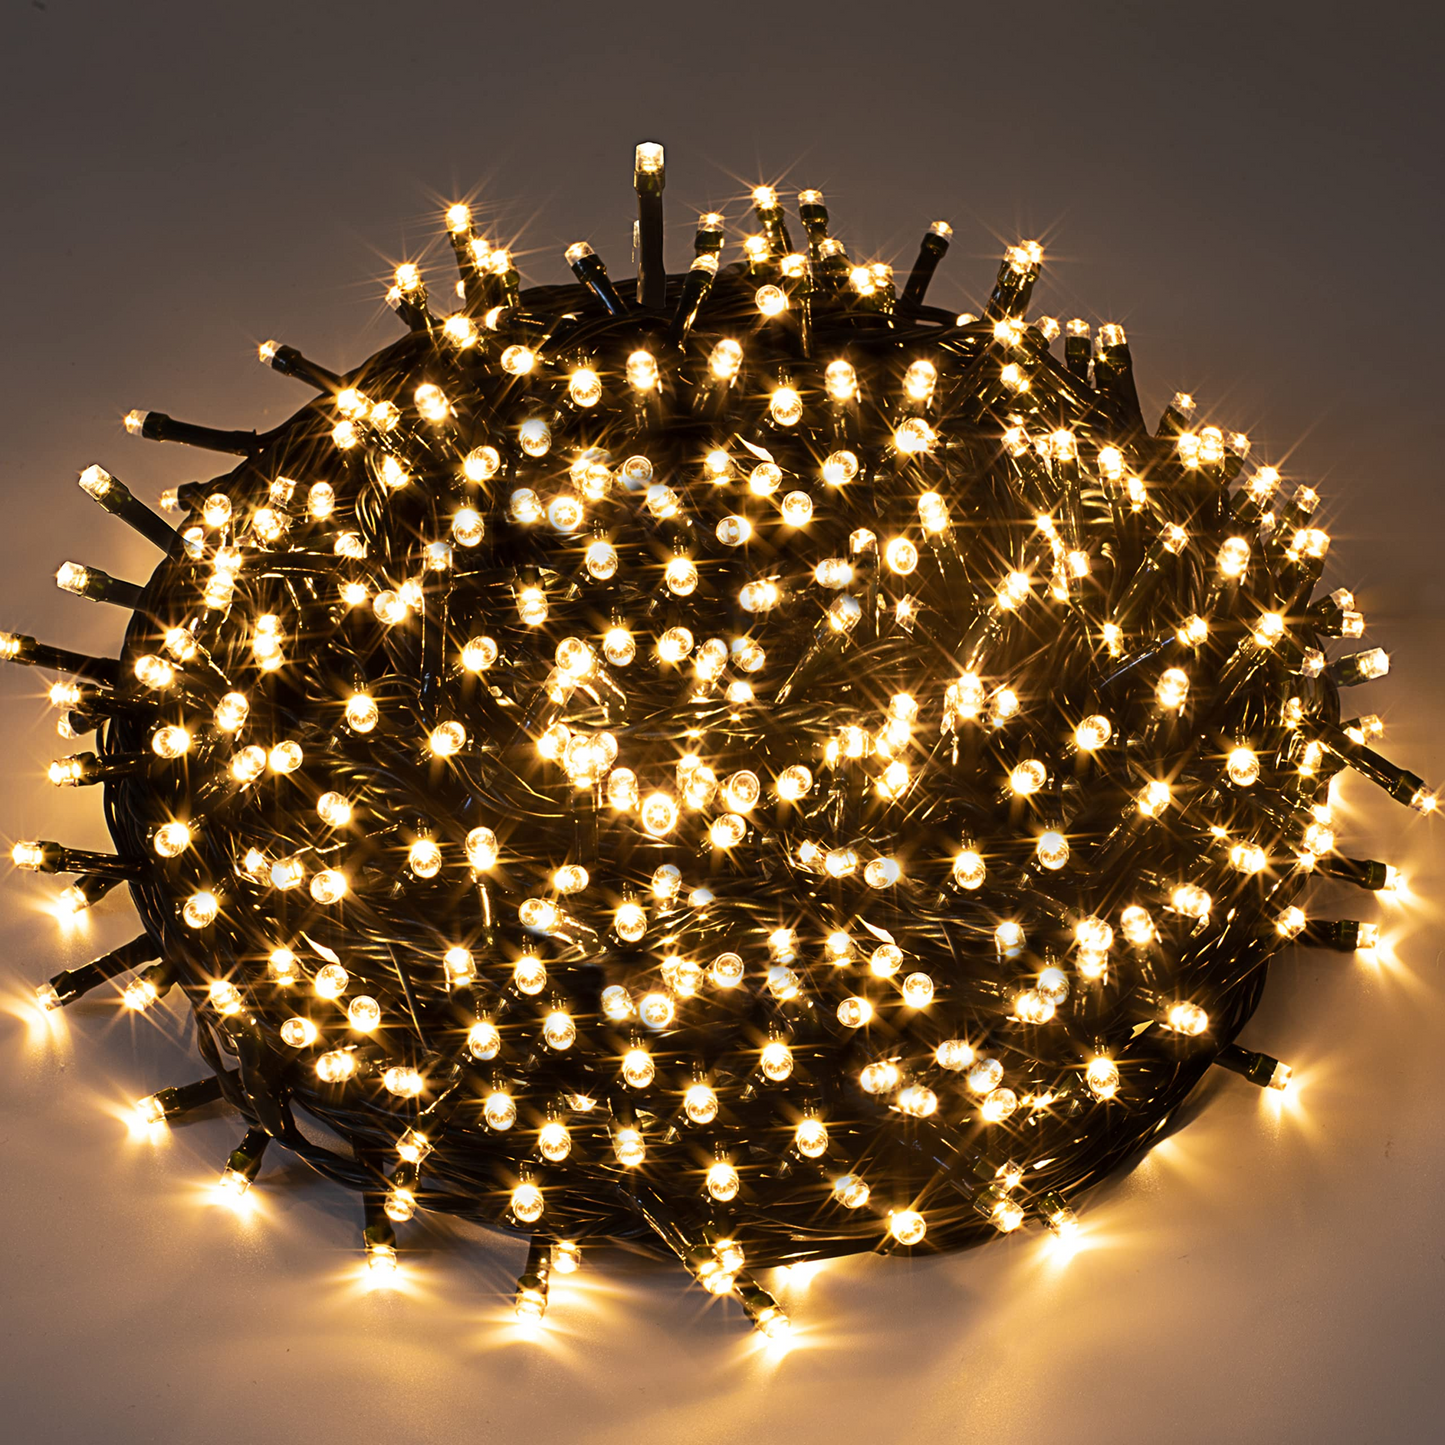 360 LED Christmas String Lights (Warm White)